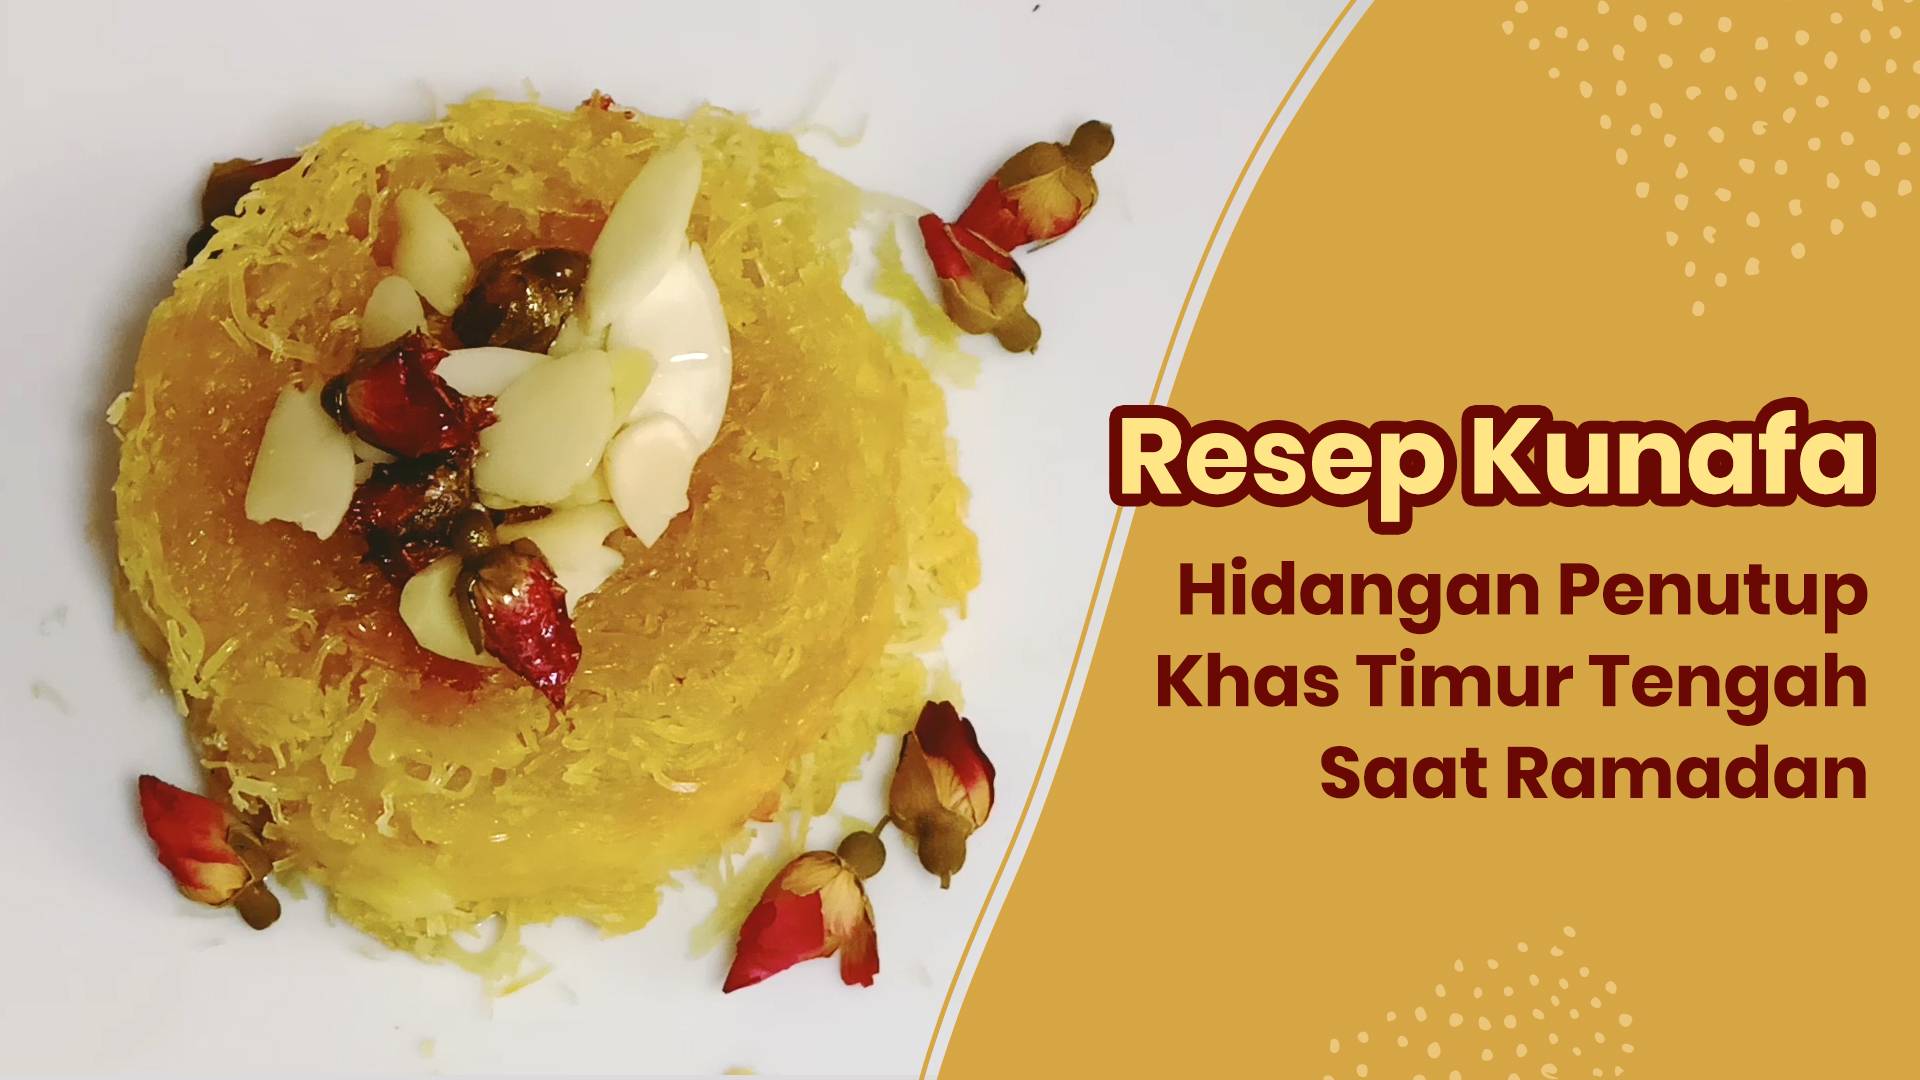 Resep Kunafa: Dessert Ramadhan Khas Timur Tengah